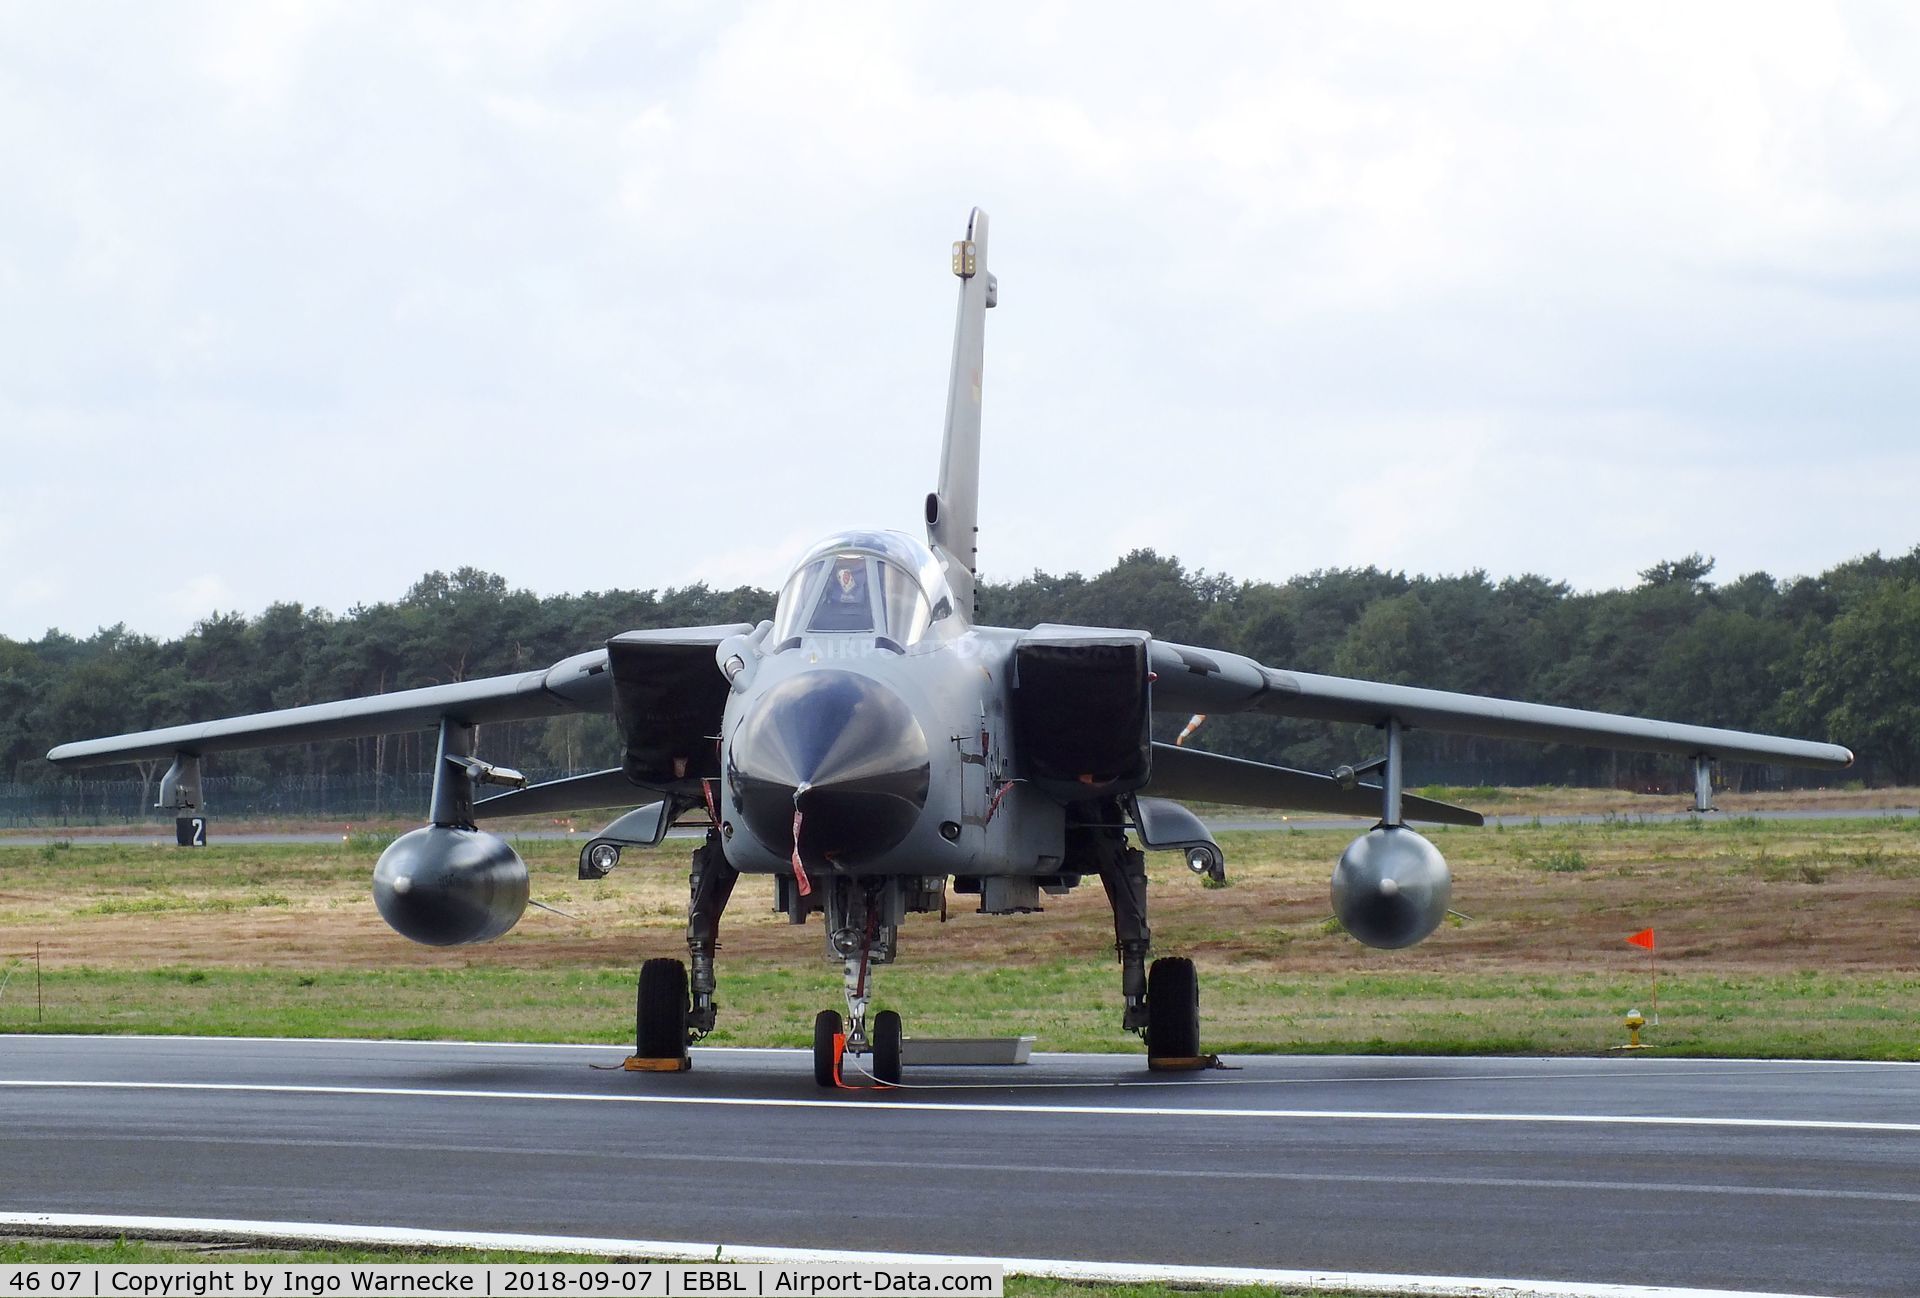 46 07, Panavia Tornado IDS(T) C/N 759/GT065/4307, Panavia Tornado IDS of the Luftwaffe (German Air Force) at the 2018 BAFD spotters day, Kleine Brogel airbase